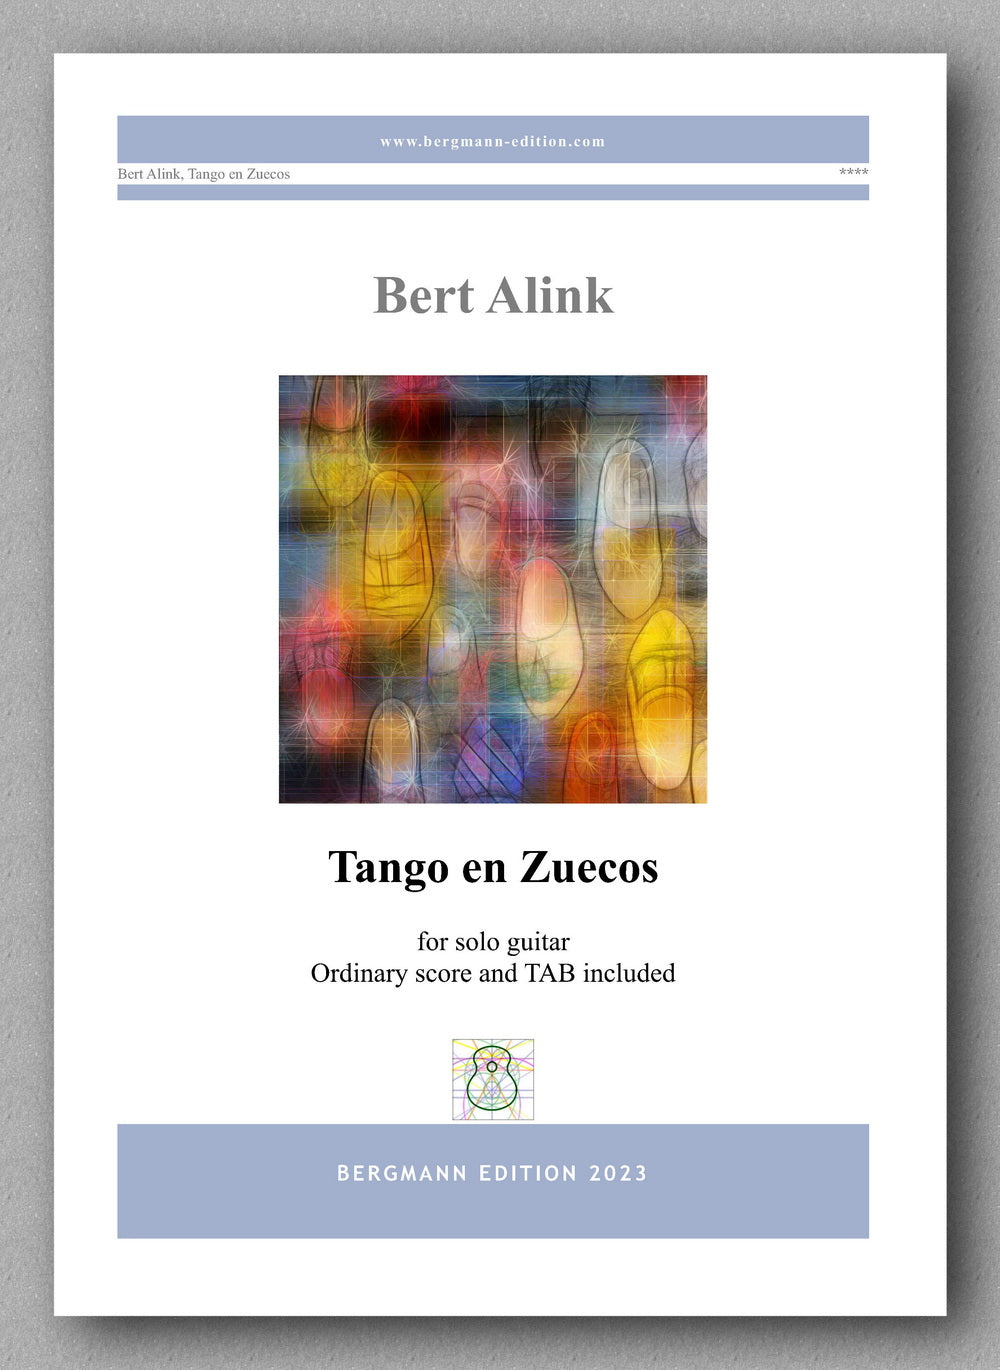 Bert Alink, Tango en Zuecos - preview of the cover